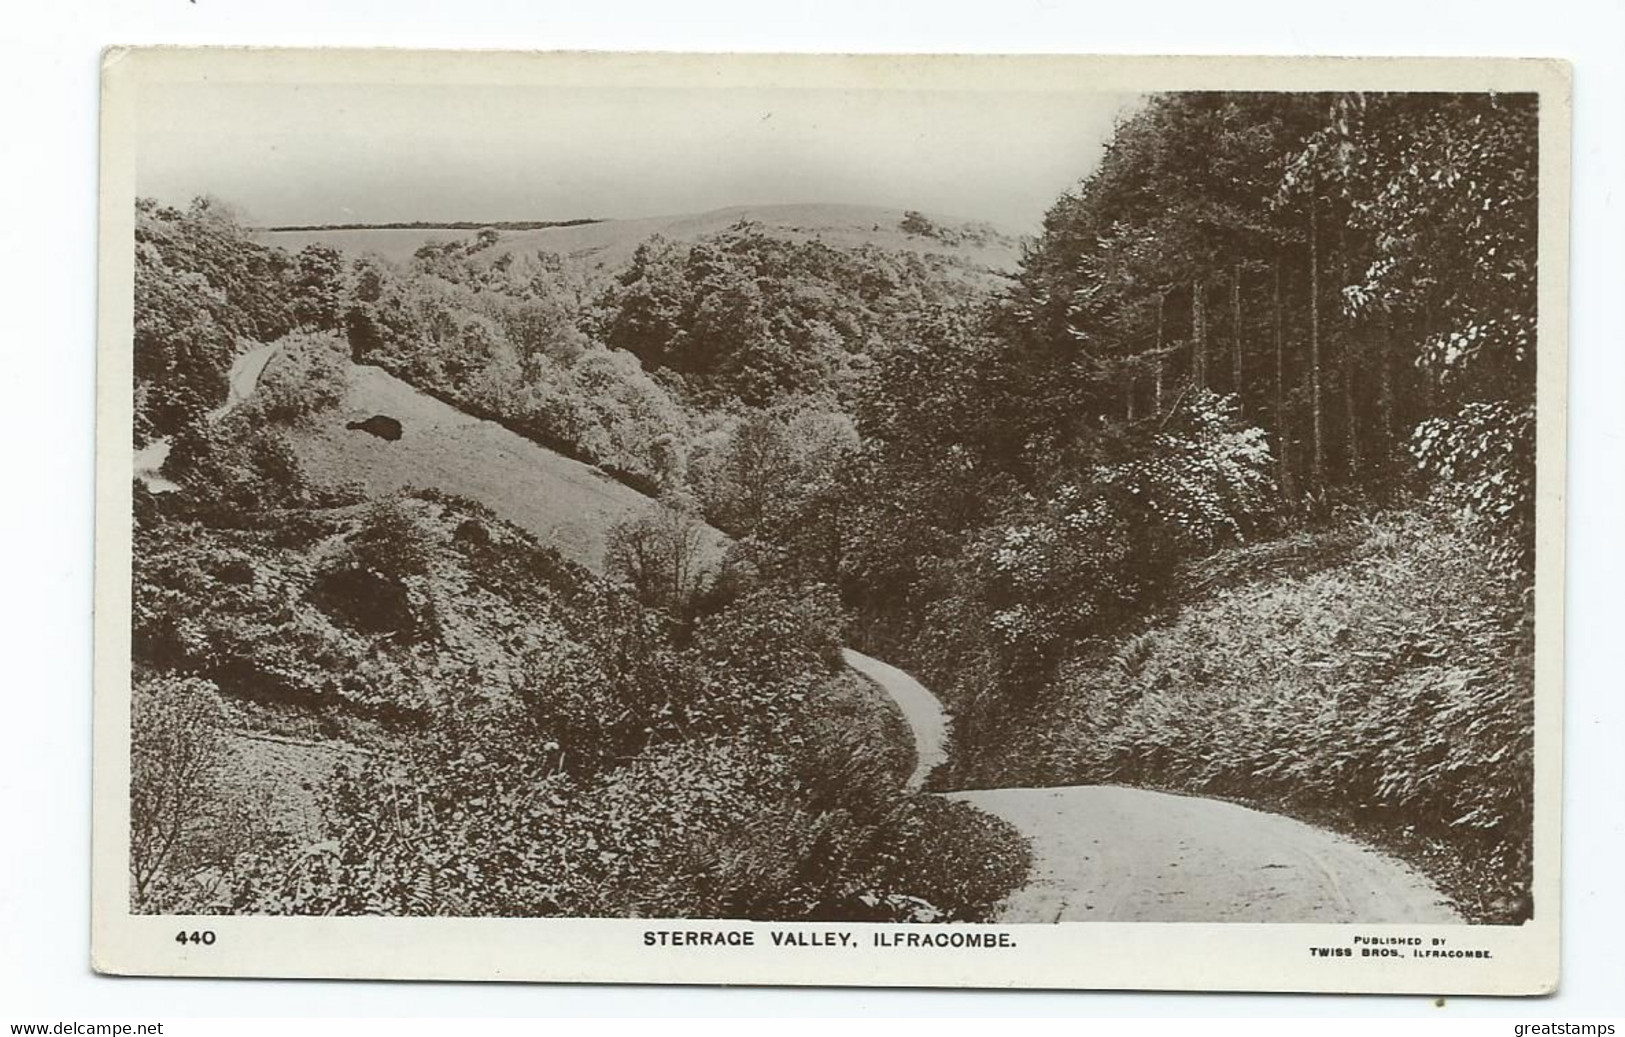 Postcard Ilfracombe Rp Sterrage Valley Twiss Bros. Unused - Ilfracombe